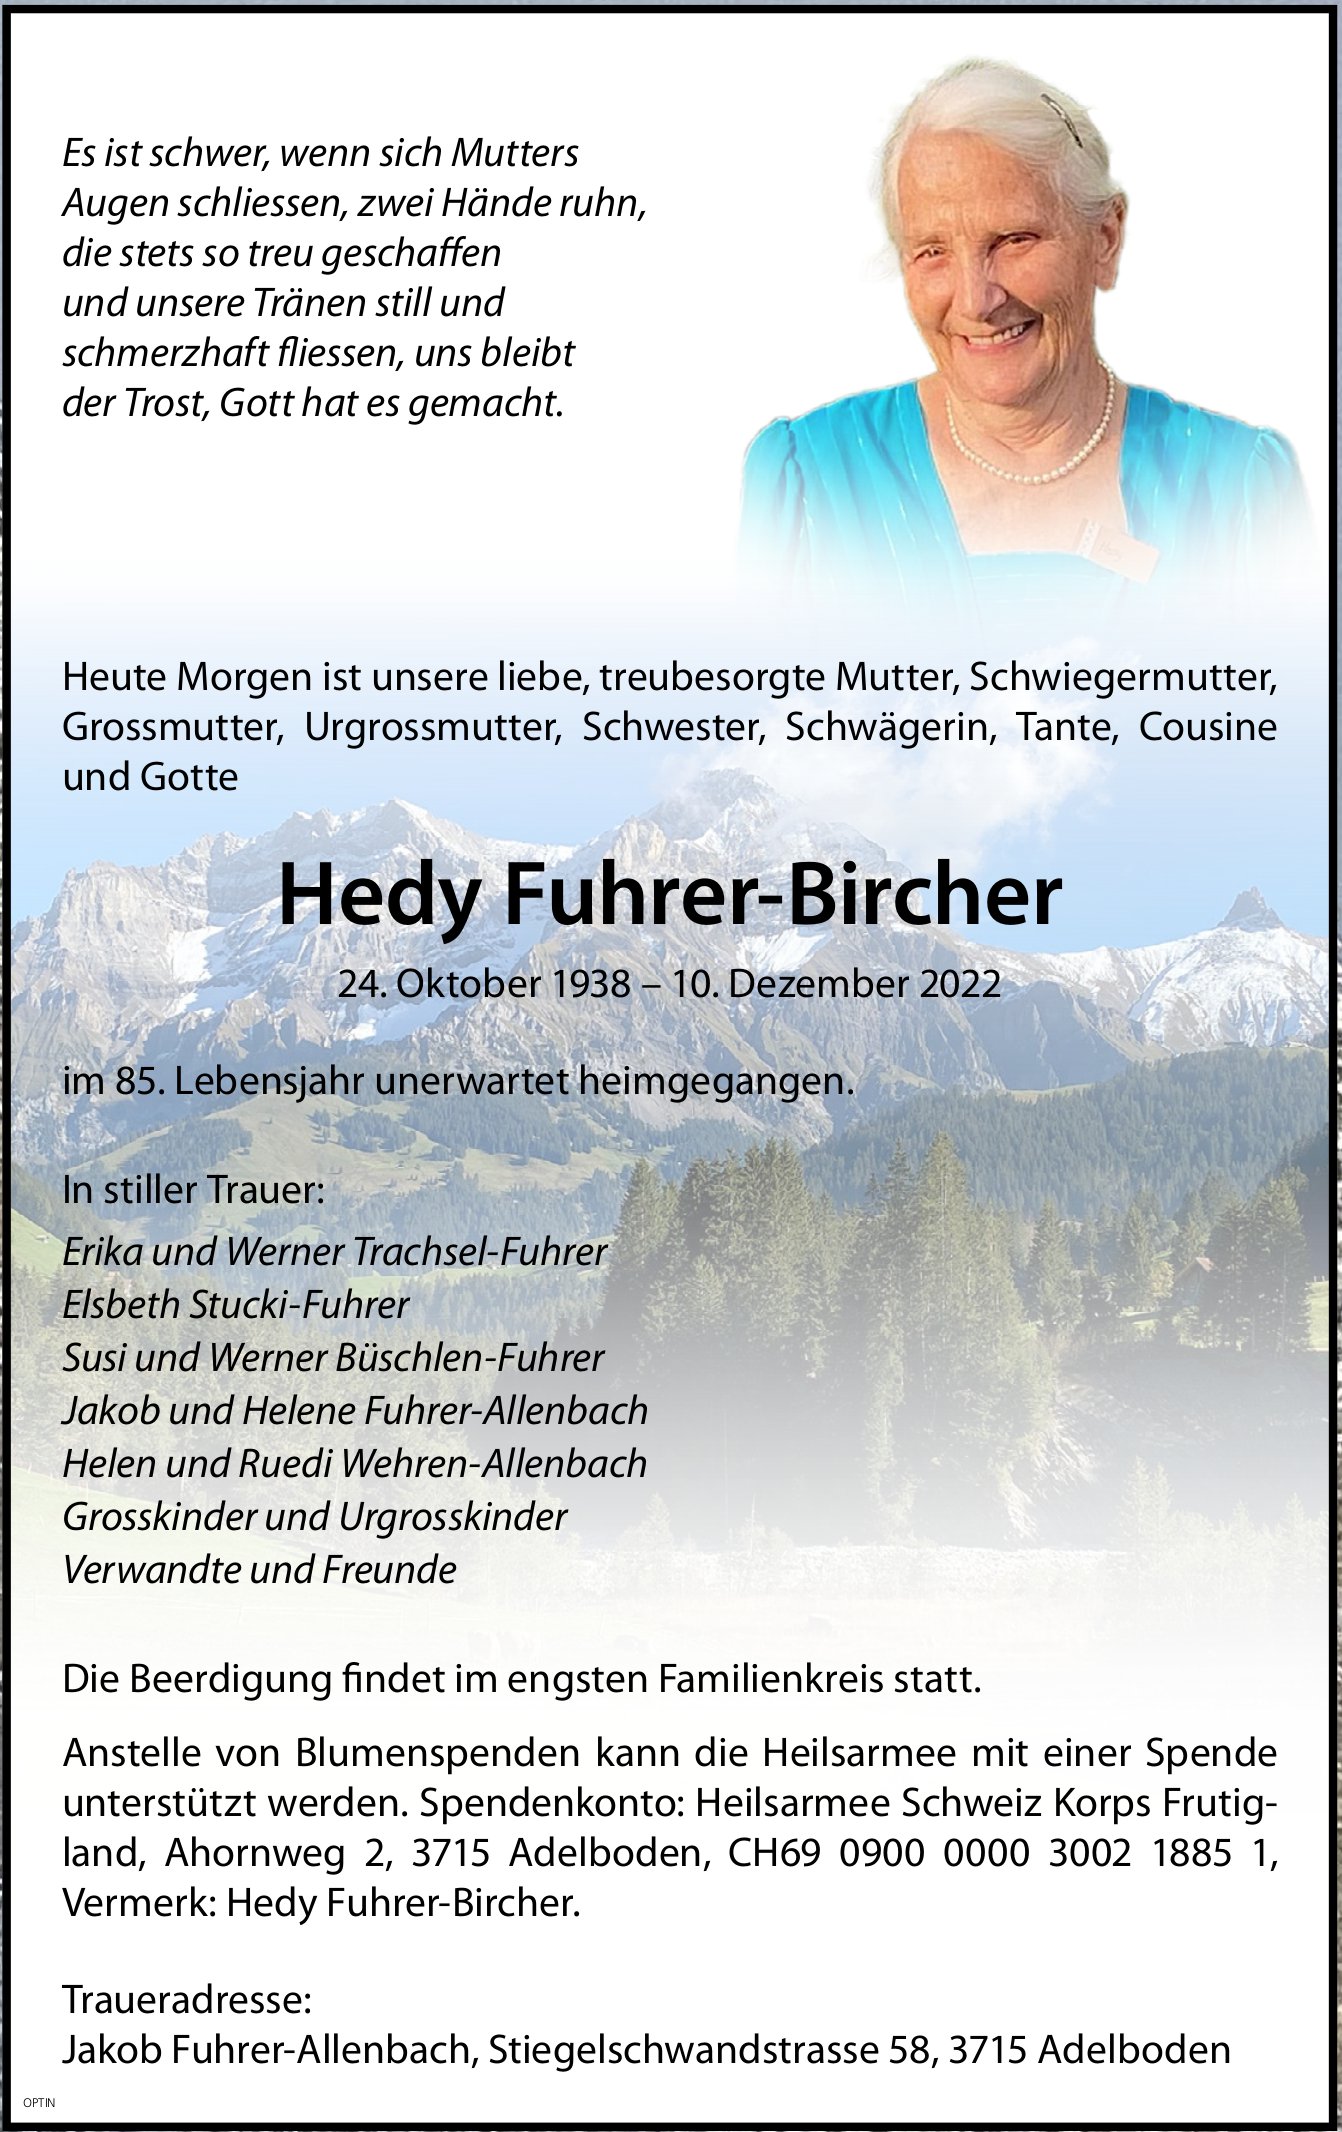 Hedy Fuhrer-Bircher, Dezember 2022 / TA